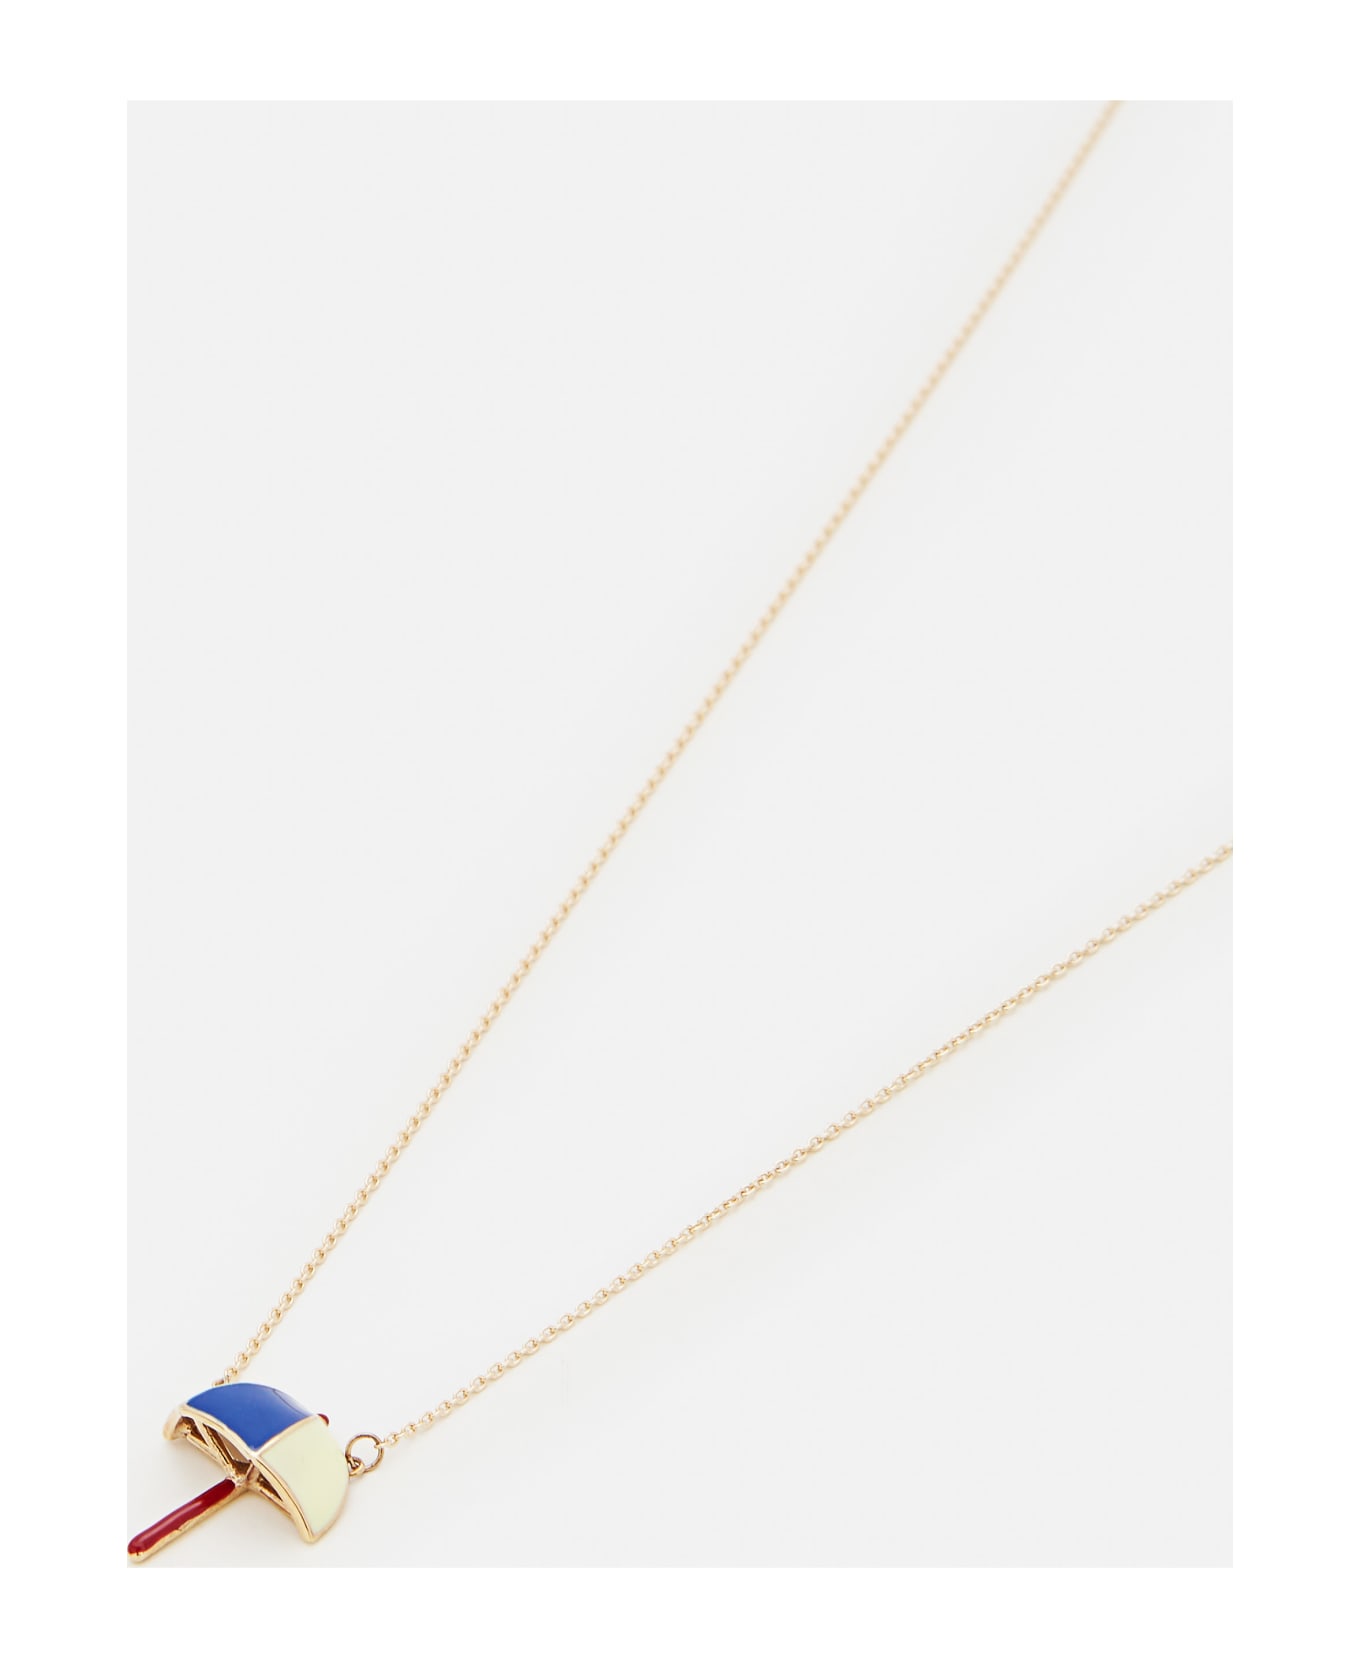 Aliita 9k Gold Sombrilla Enamel Necklace - Blue